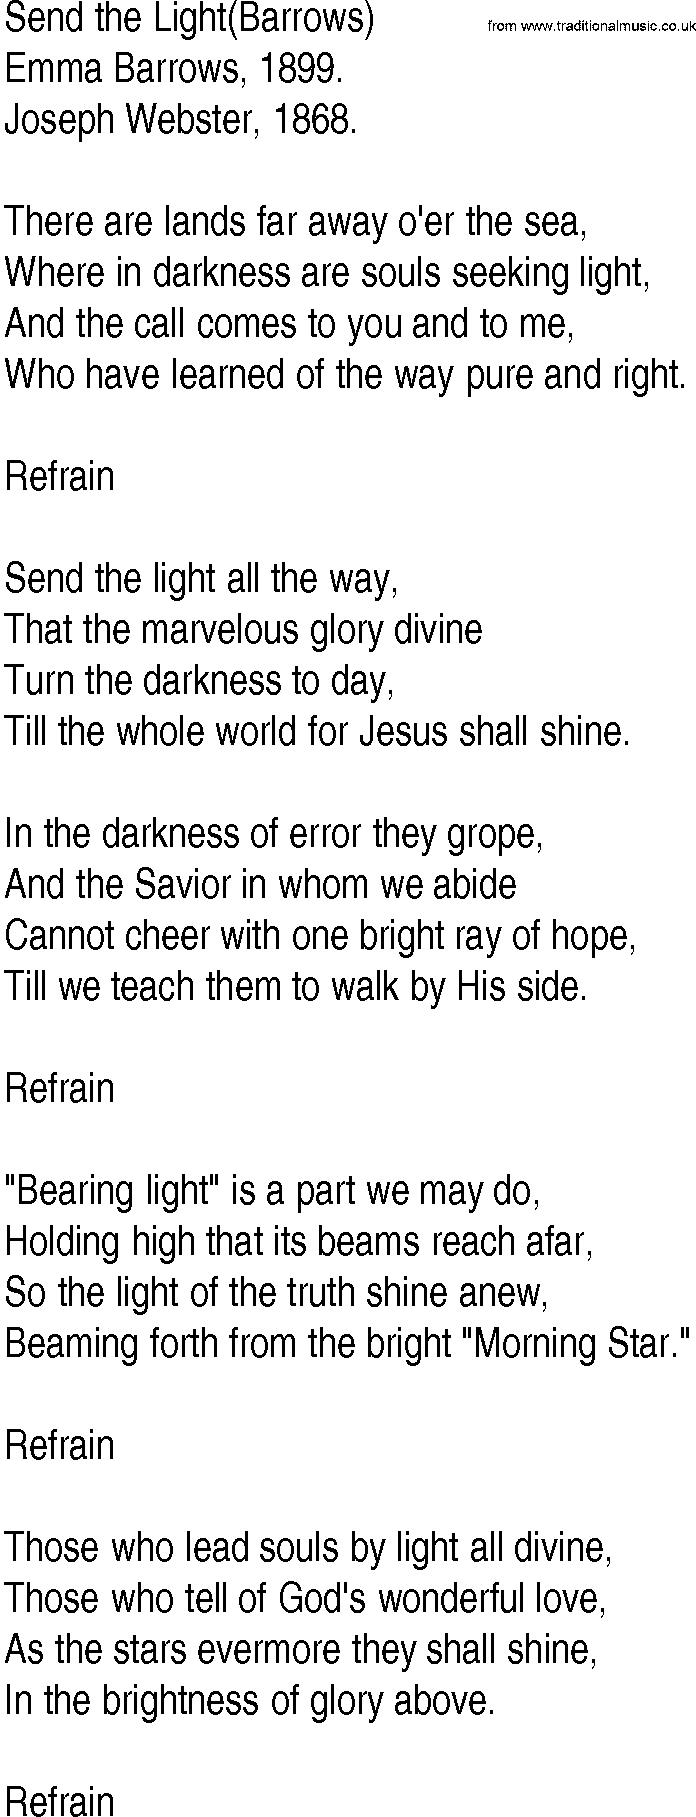 Hymn and Gospel Song: Send the Light(Barrows) by Emma Barrows lyrics